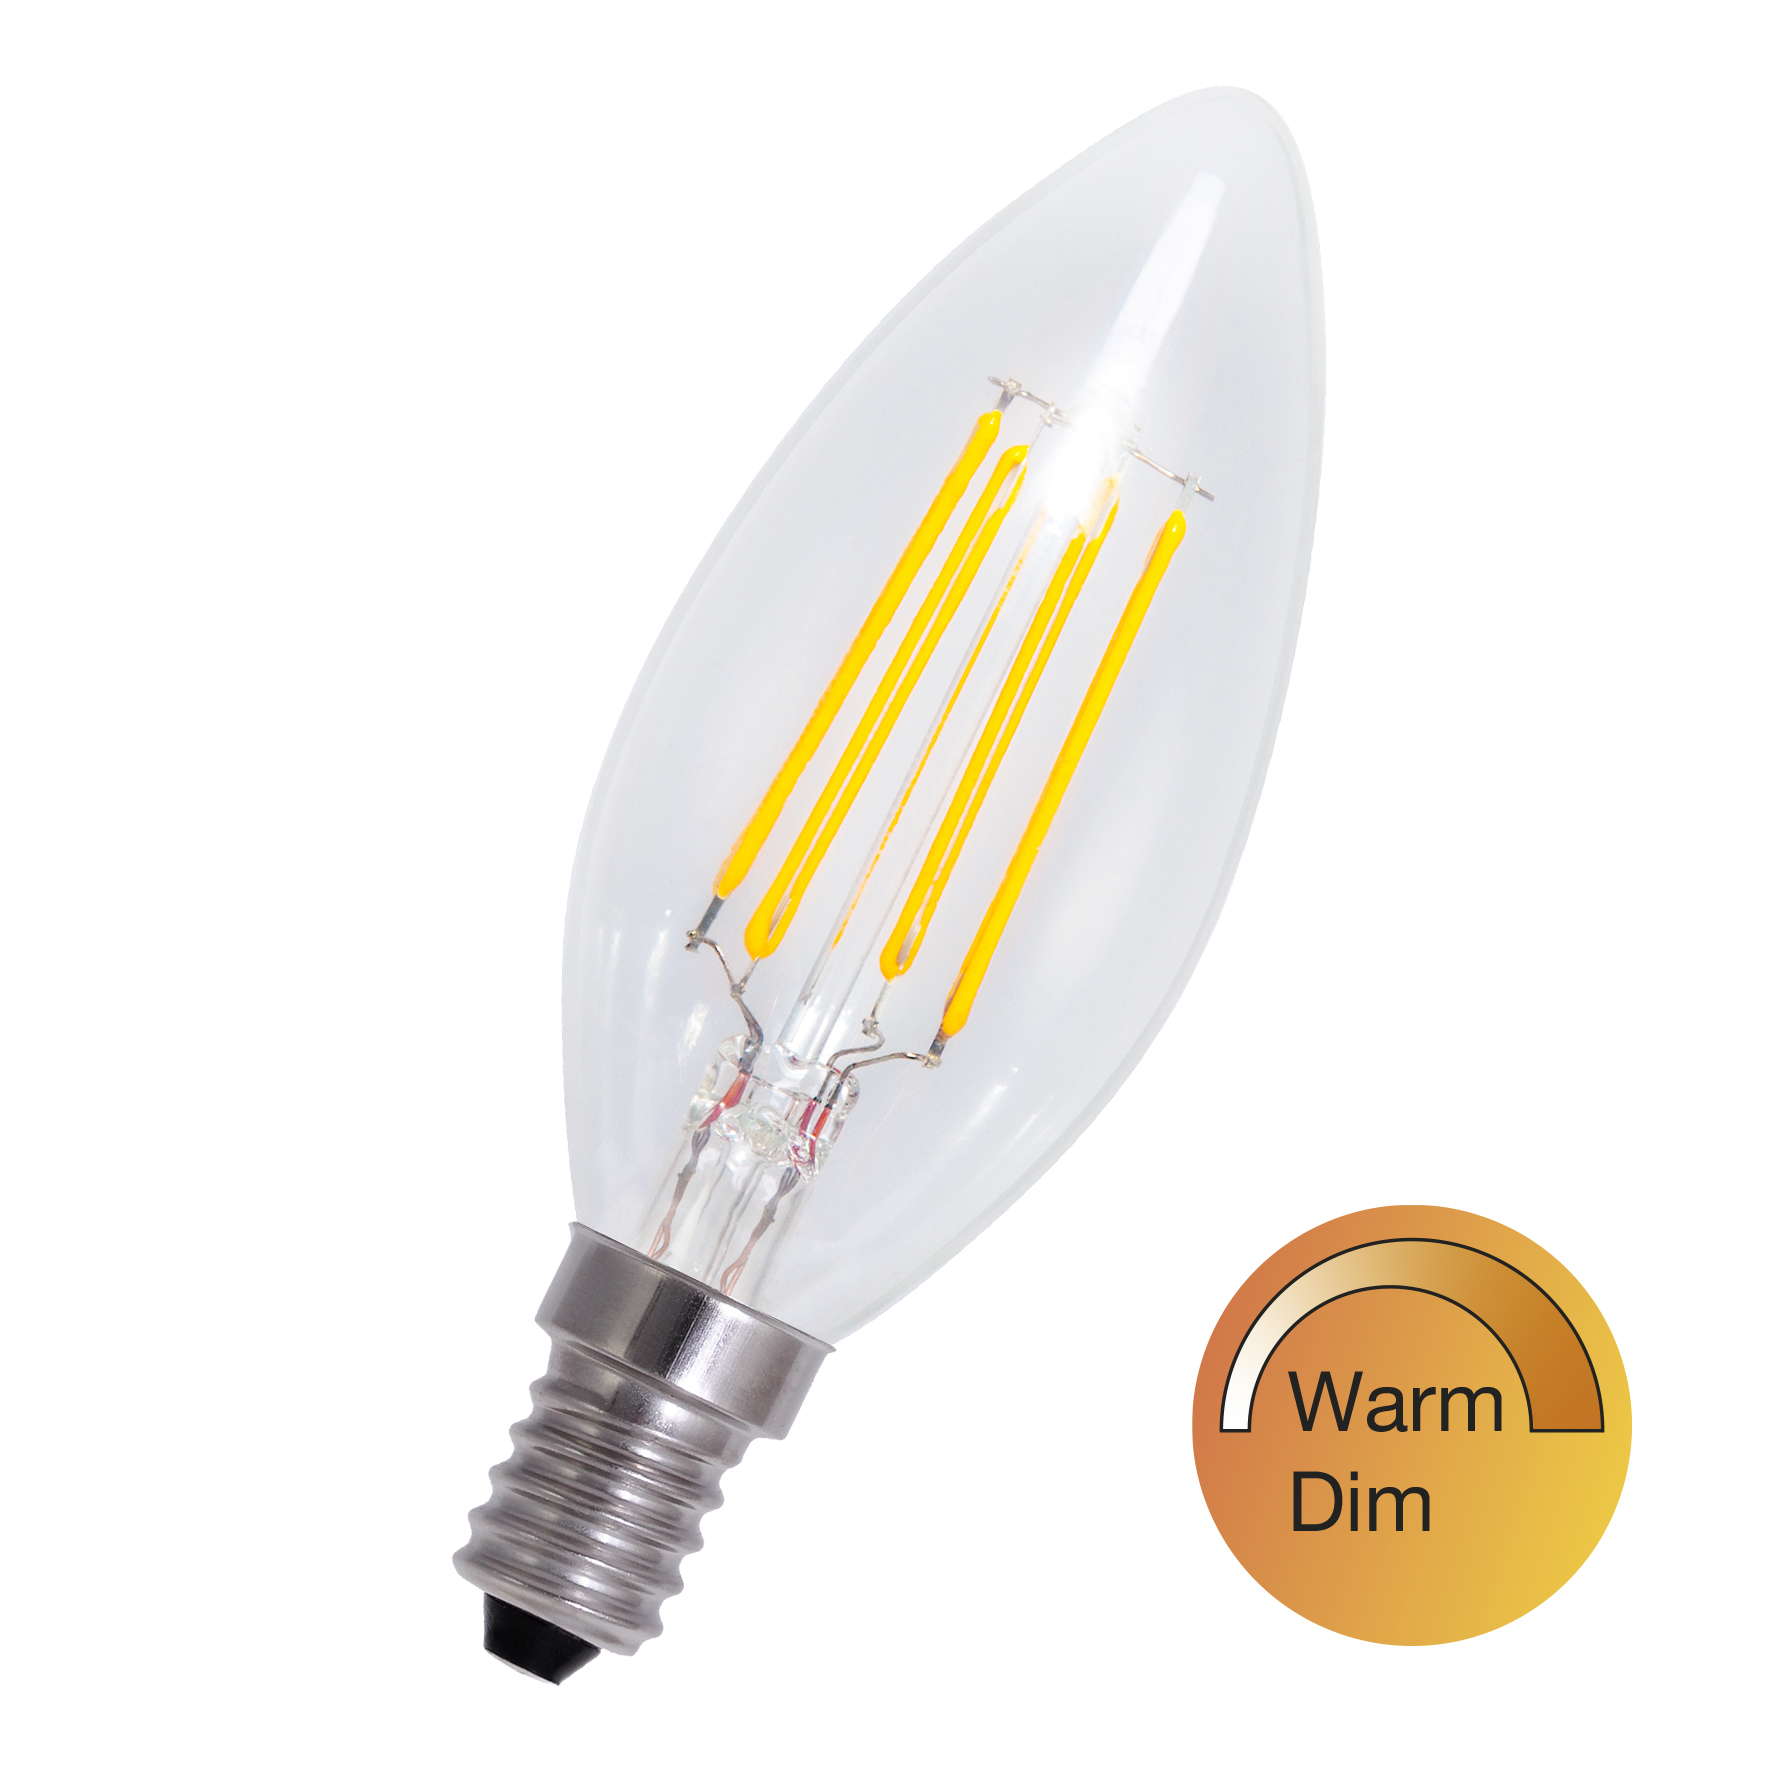 LED FIL WarmDim C35 E14 3.5W (26W) 270-80lm 927-919 CL